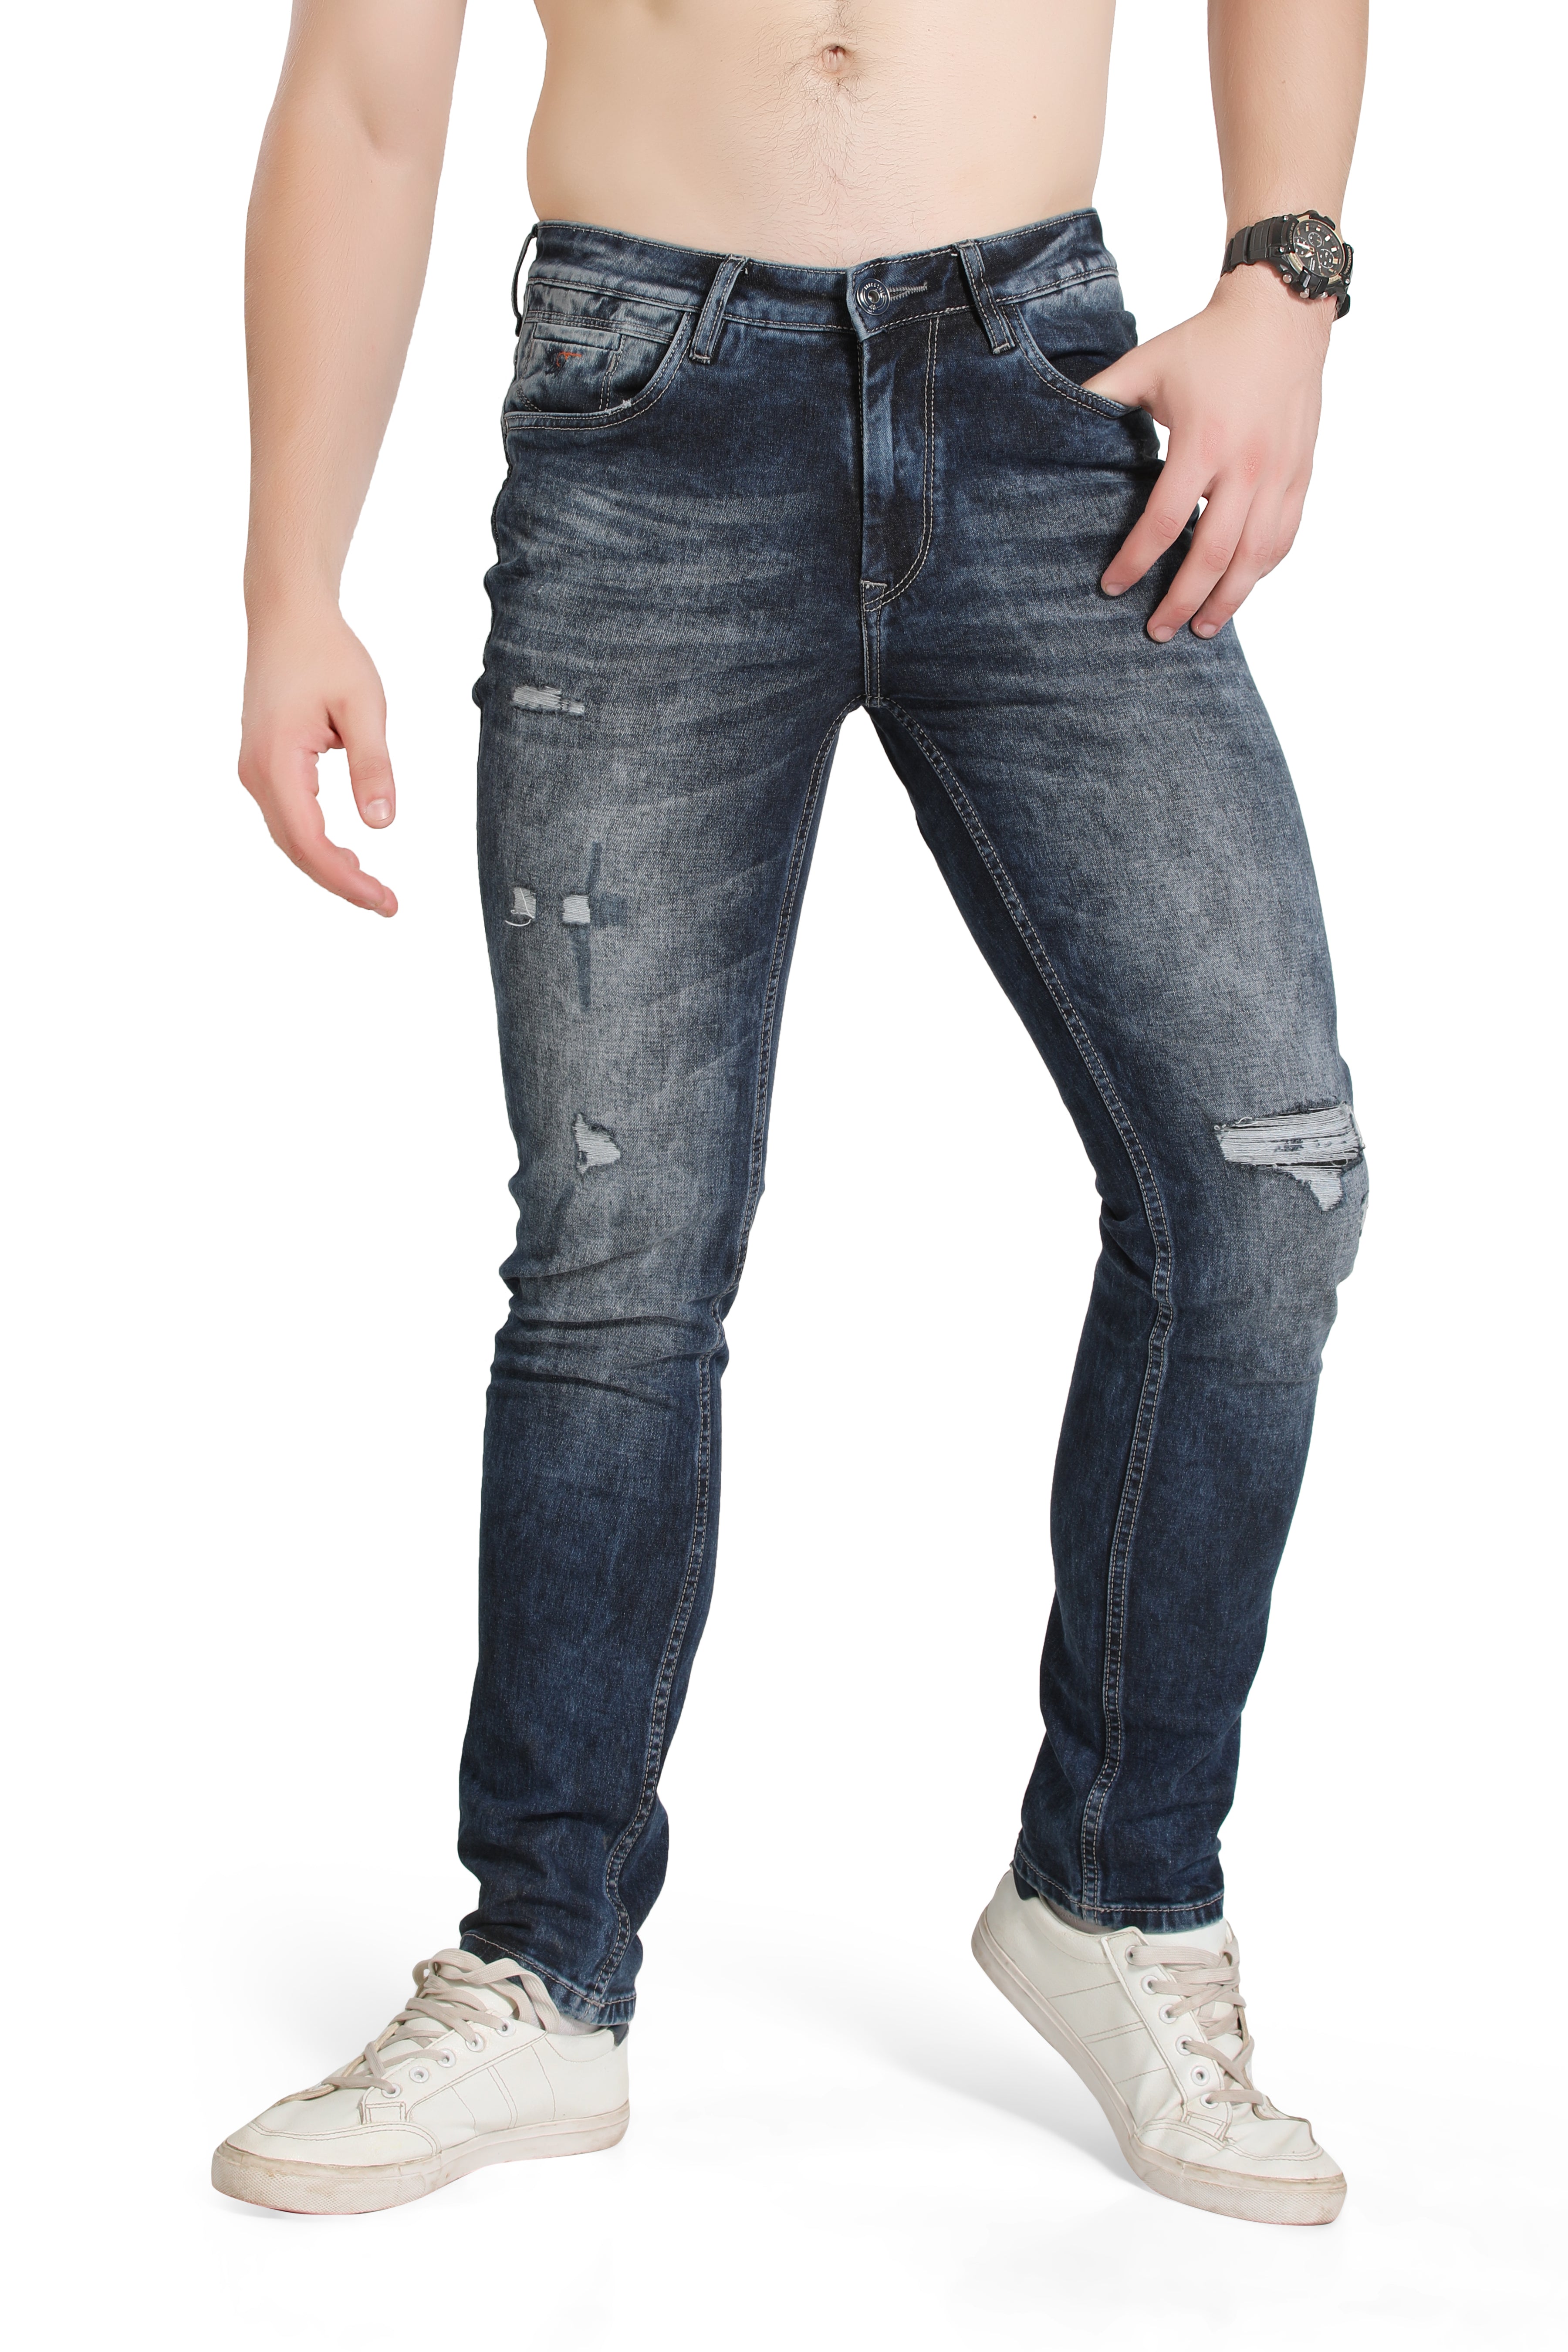 Details more than 116 denim jeans company franchise